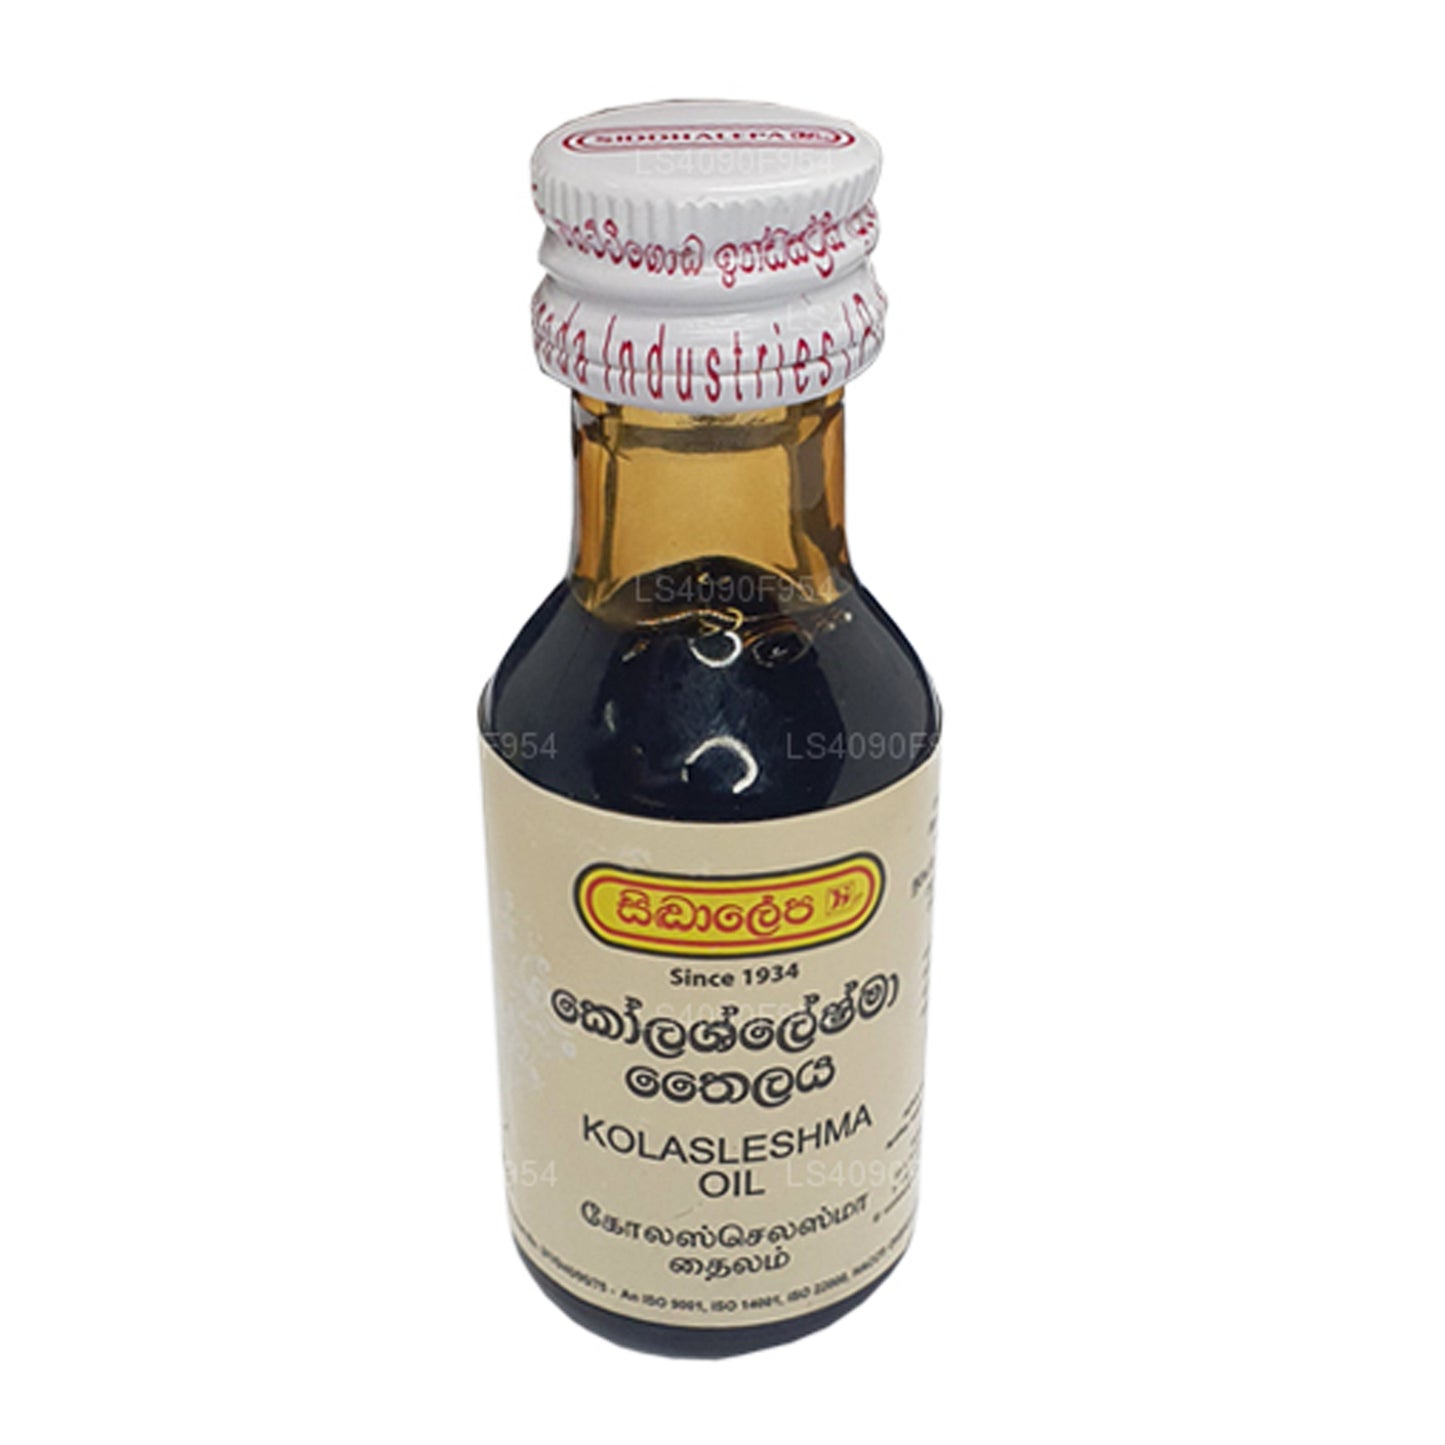 Siddhalepa Kolasleshma Oil (30ml)